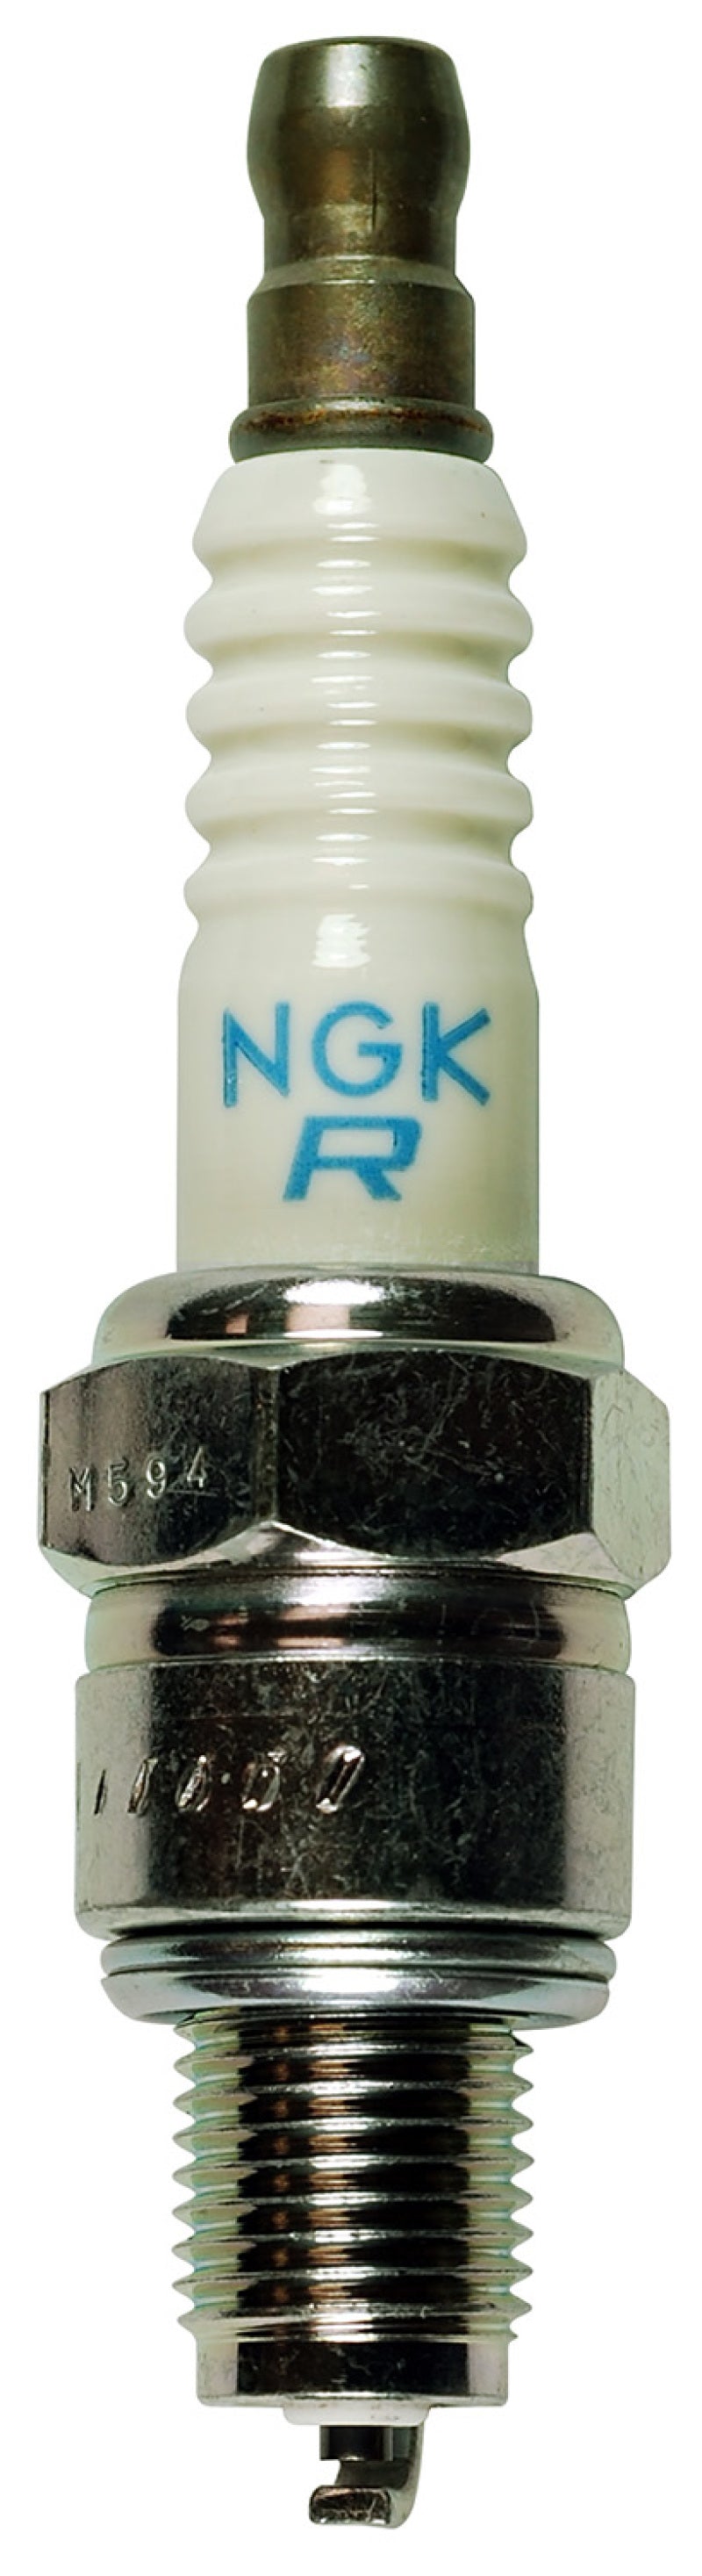 NGK Standard Spark Plug Box of 10 (LR4C-E)